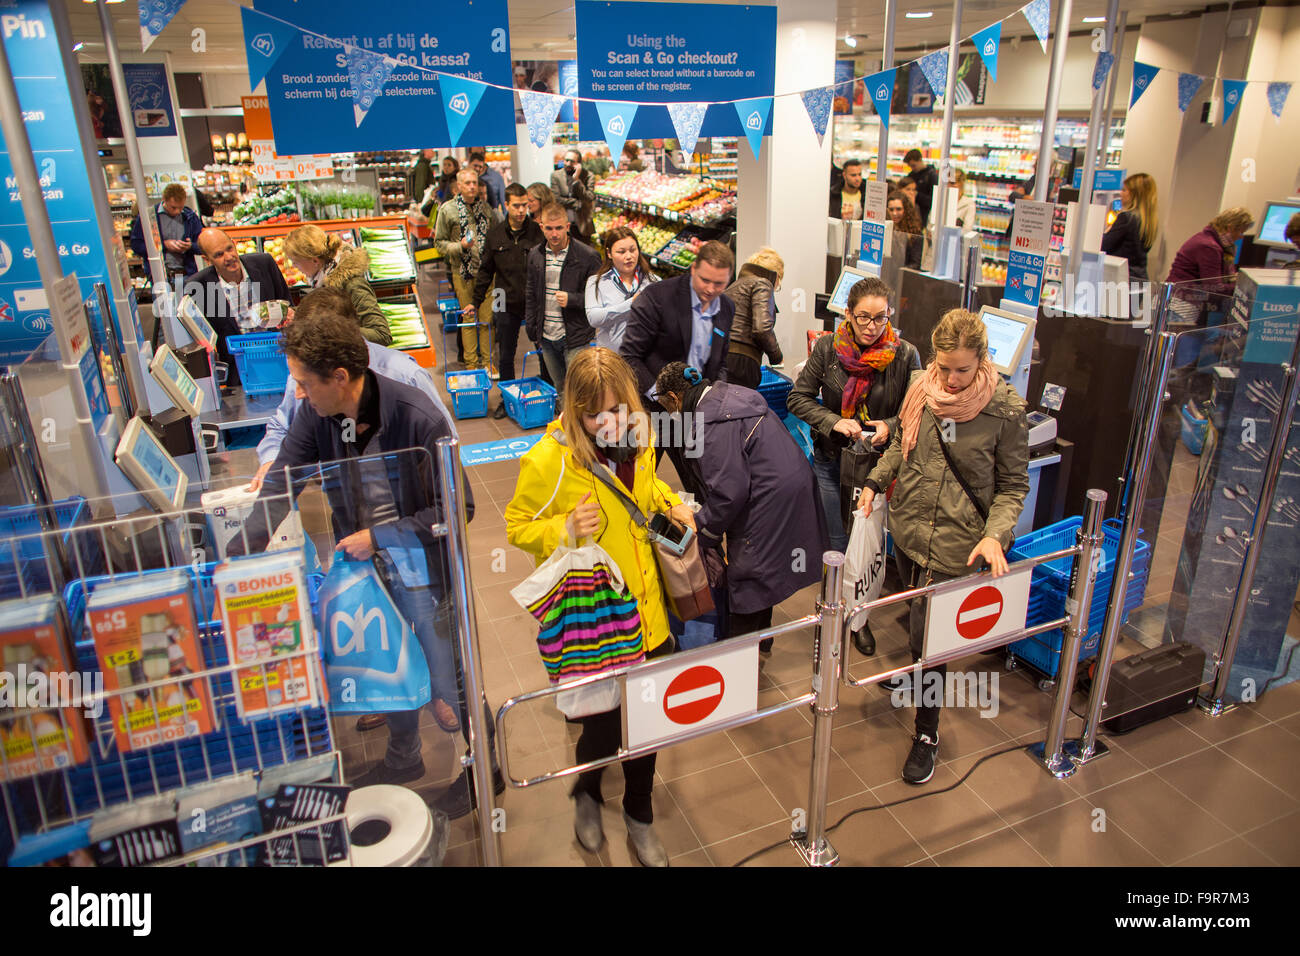 Albert heijn supermarket hi-res stock photography and images - Alamy